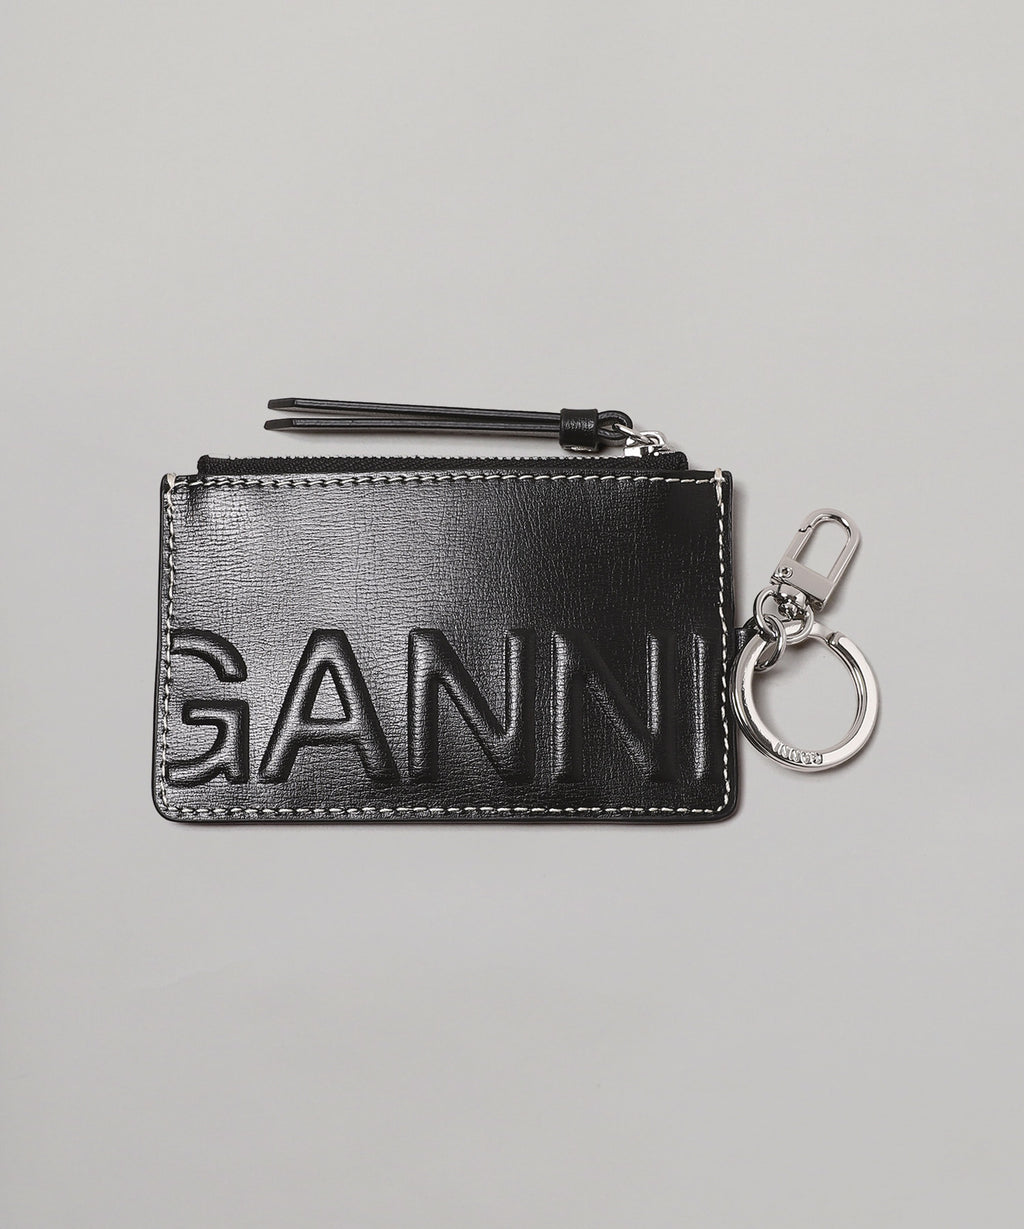 ganni /ガニー Banner Leather Coin Wallet | www.avredentor.com.br